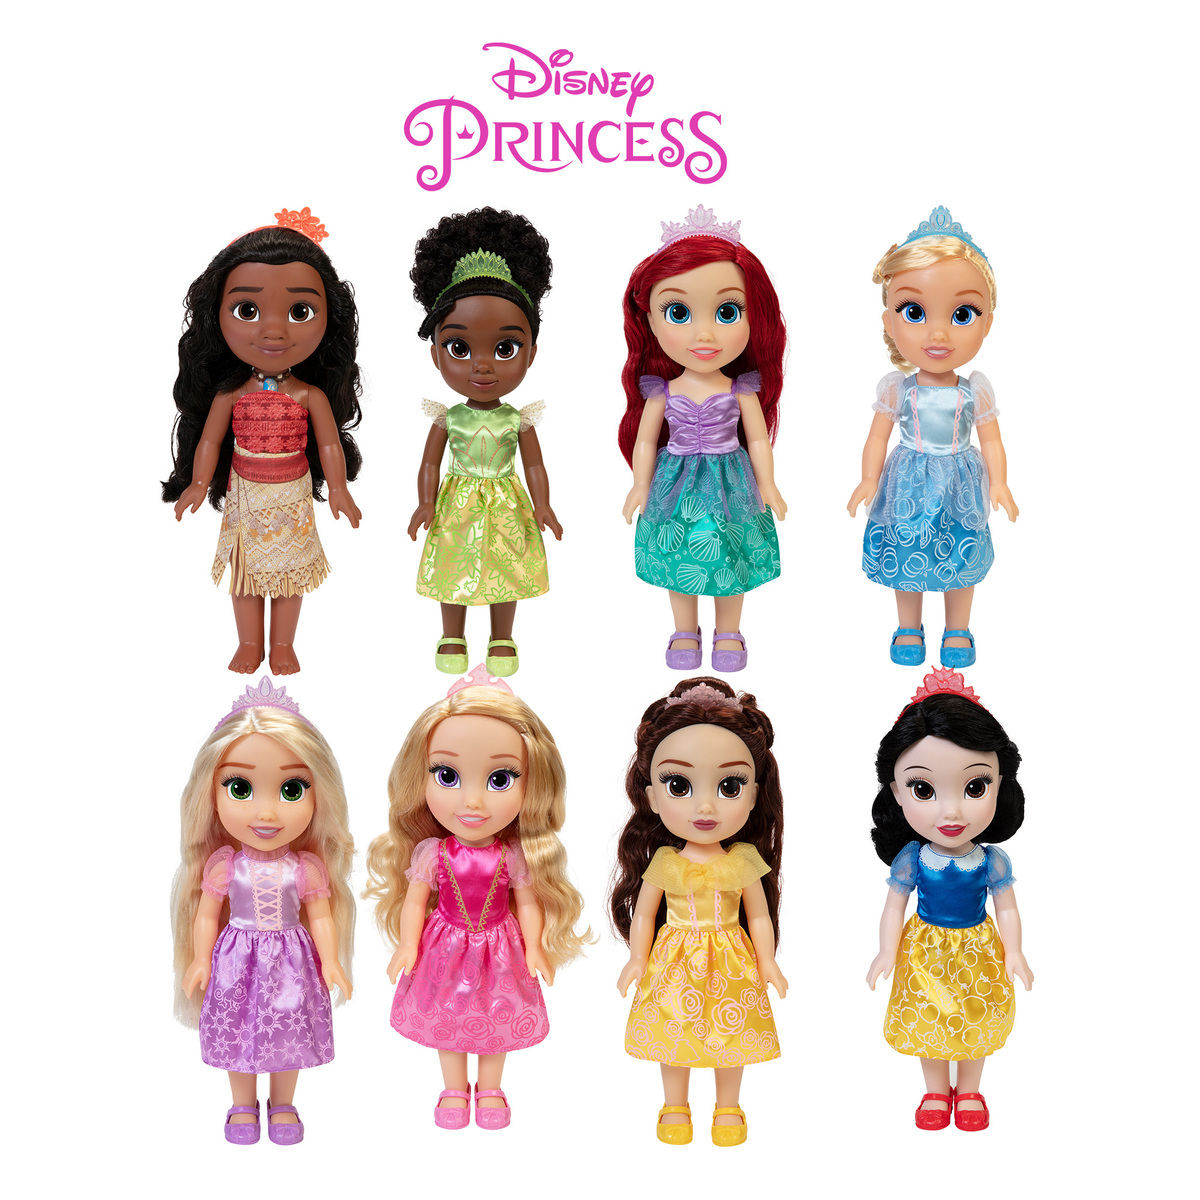 Disney Princess Value Full Doll My Friend 213014 Assorted